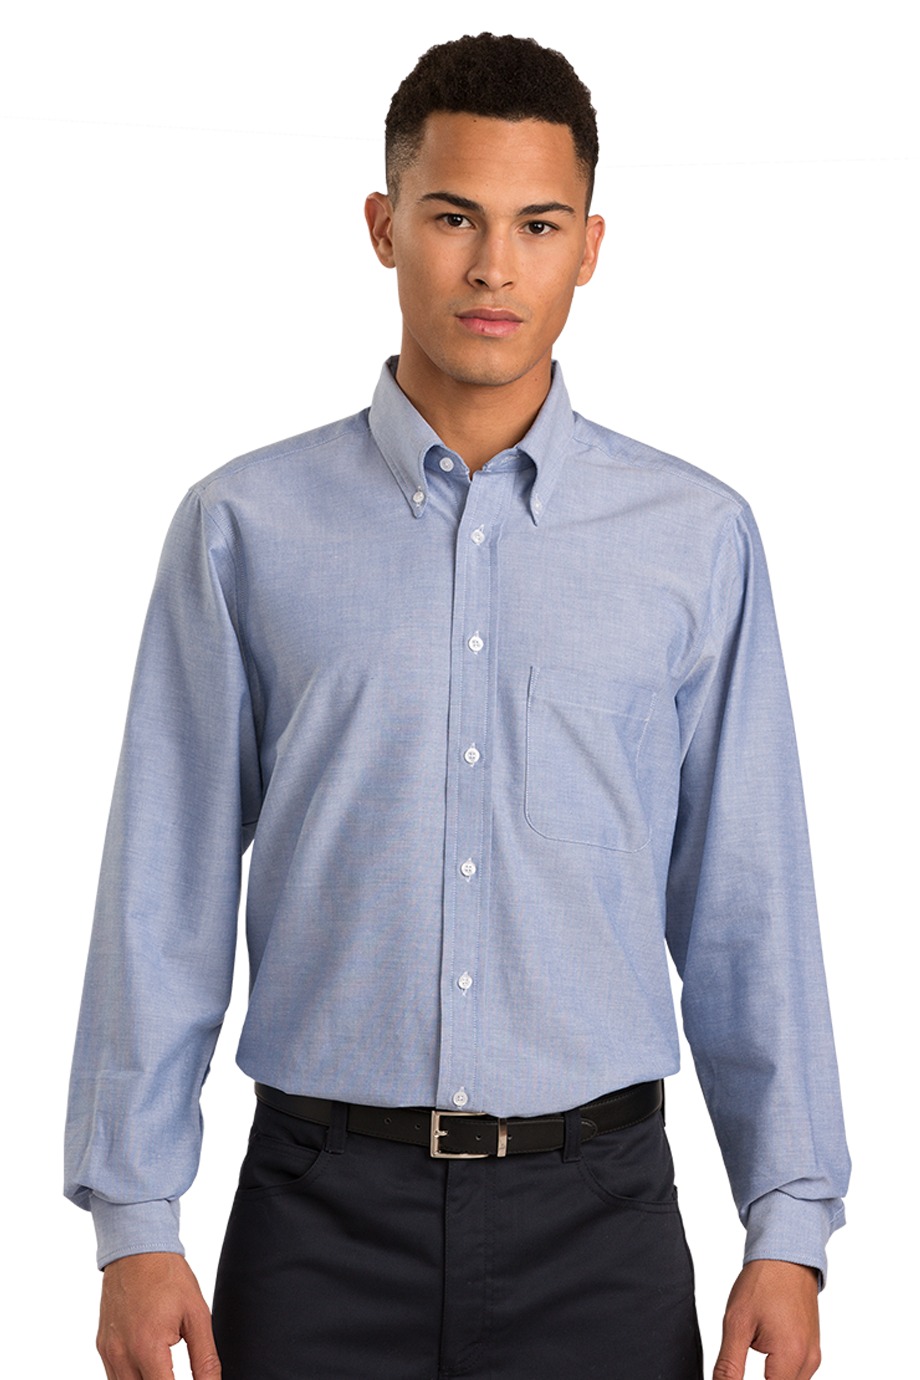 Edwards Garment 1078 - Oxford Long Sleeve Shirt